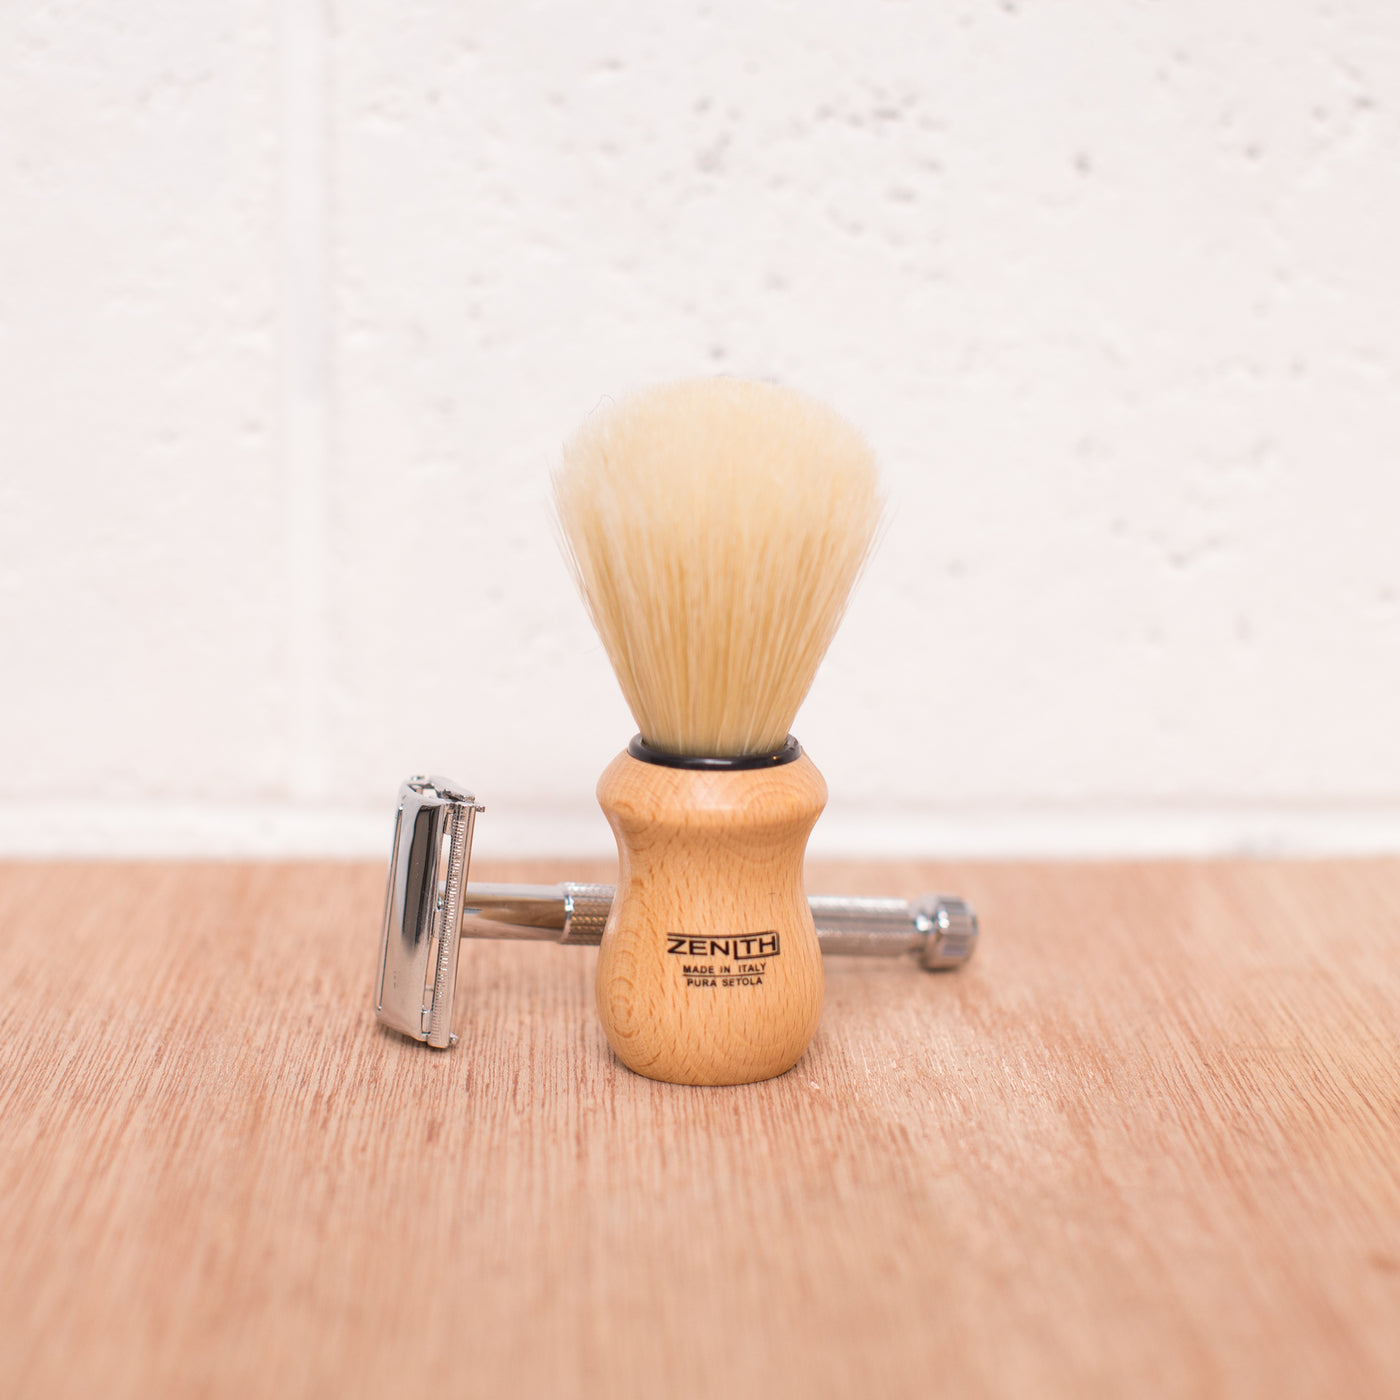 Zenith Wooden Shaver Brush (1957410111539)